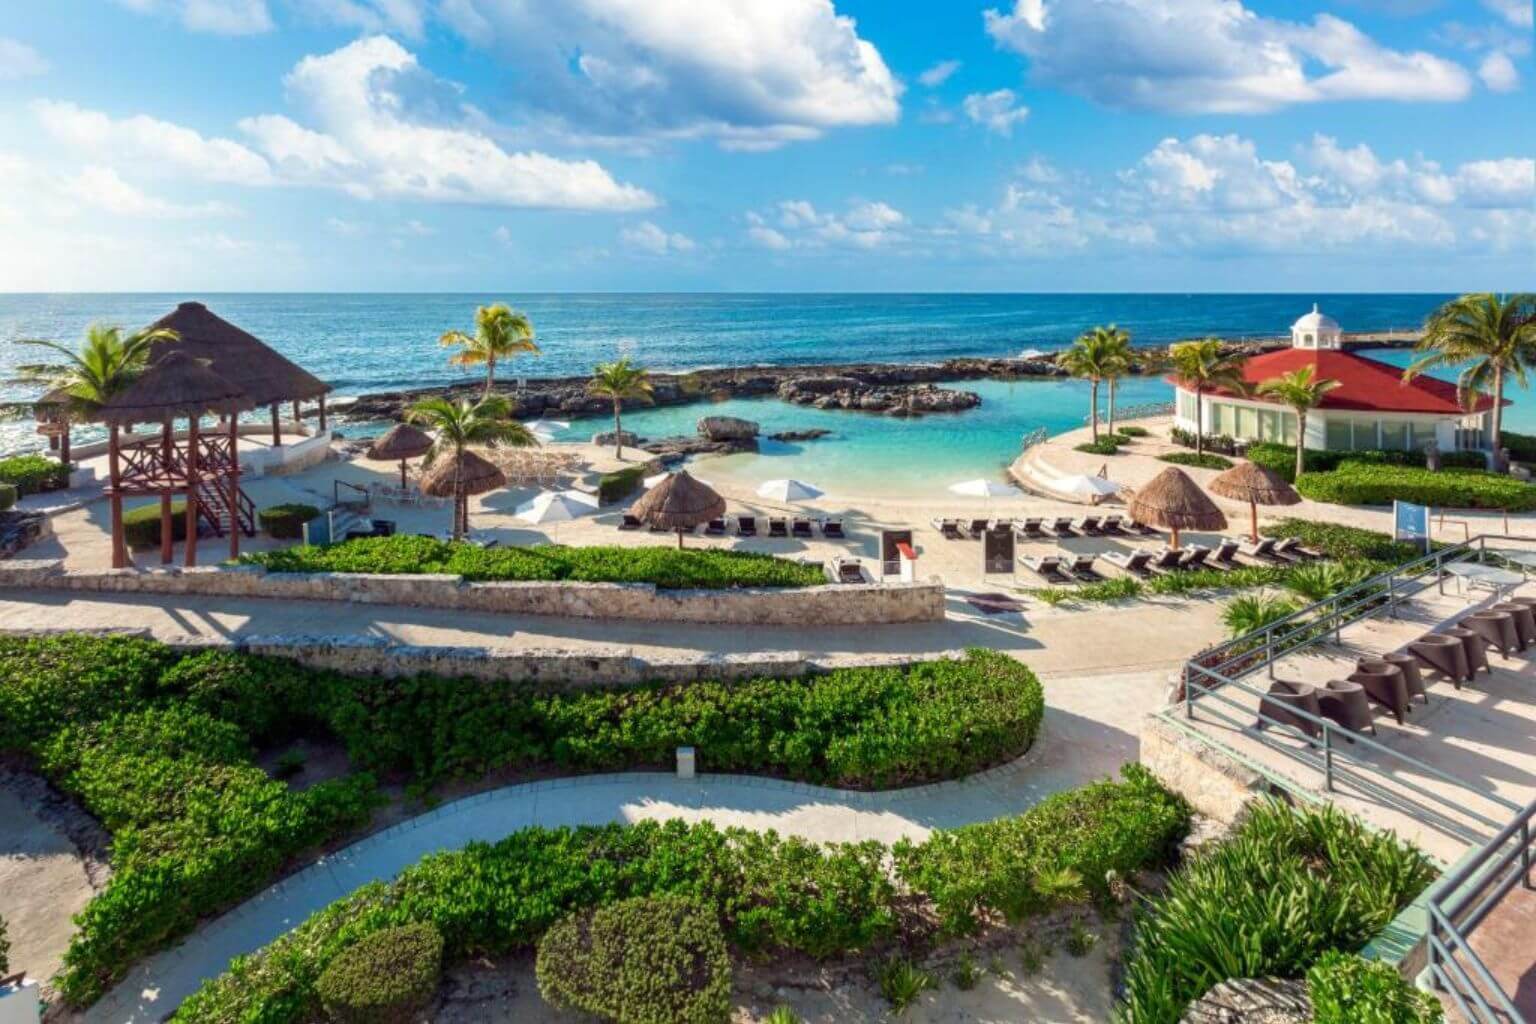 Beautiful grounds and beach at the ocean. Hard Rock Riviera Maya Hacienda Hotel.